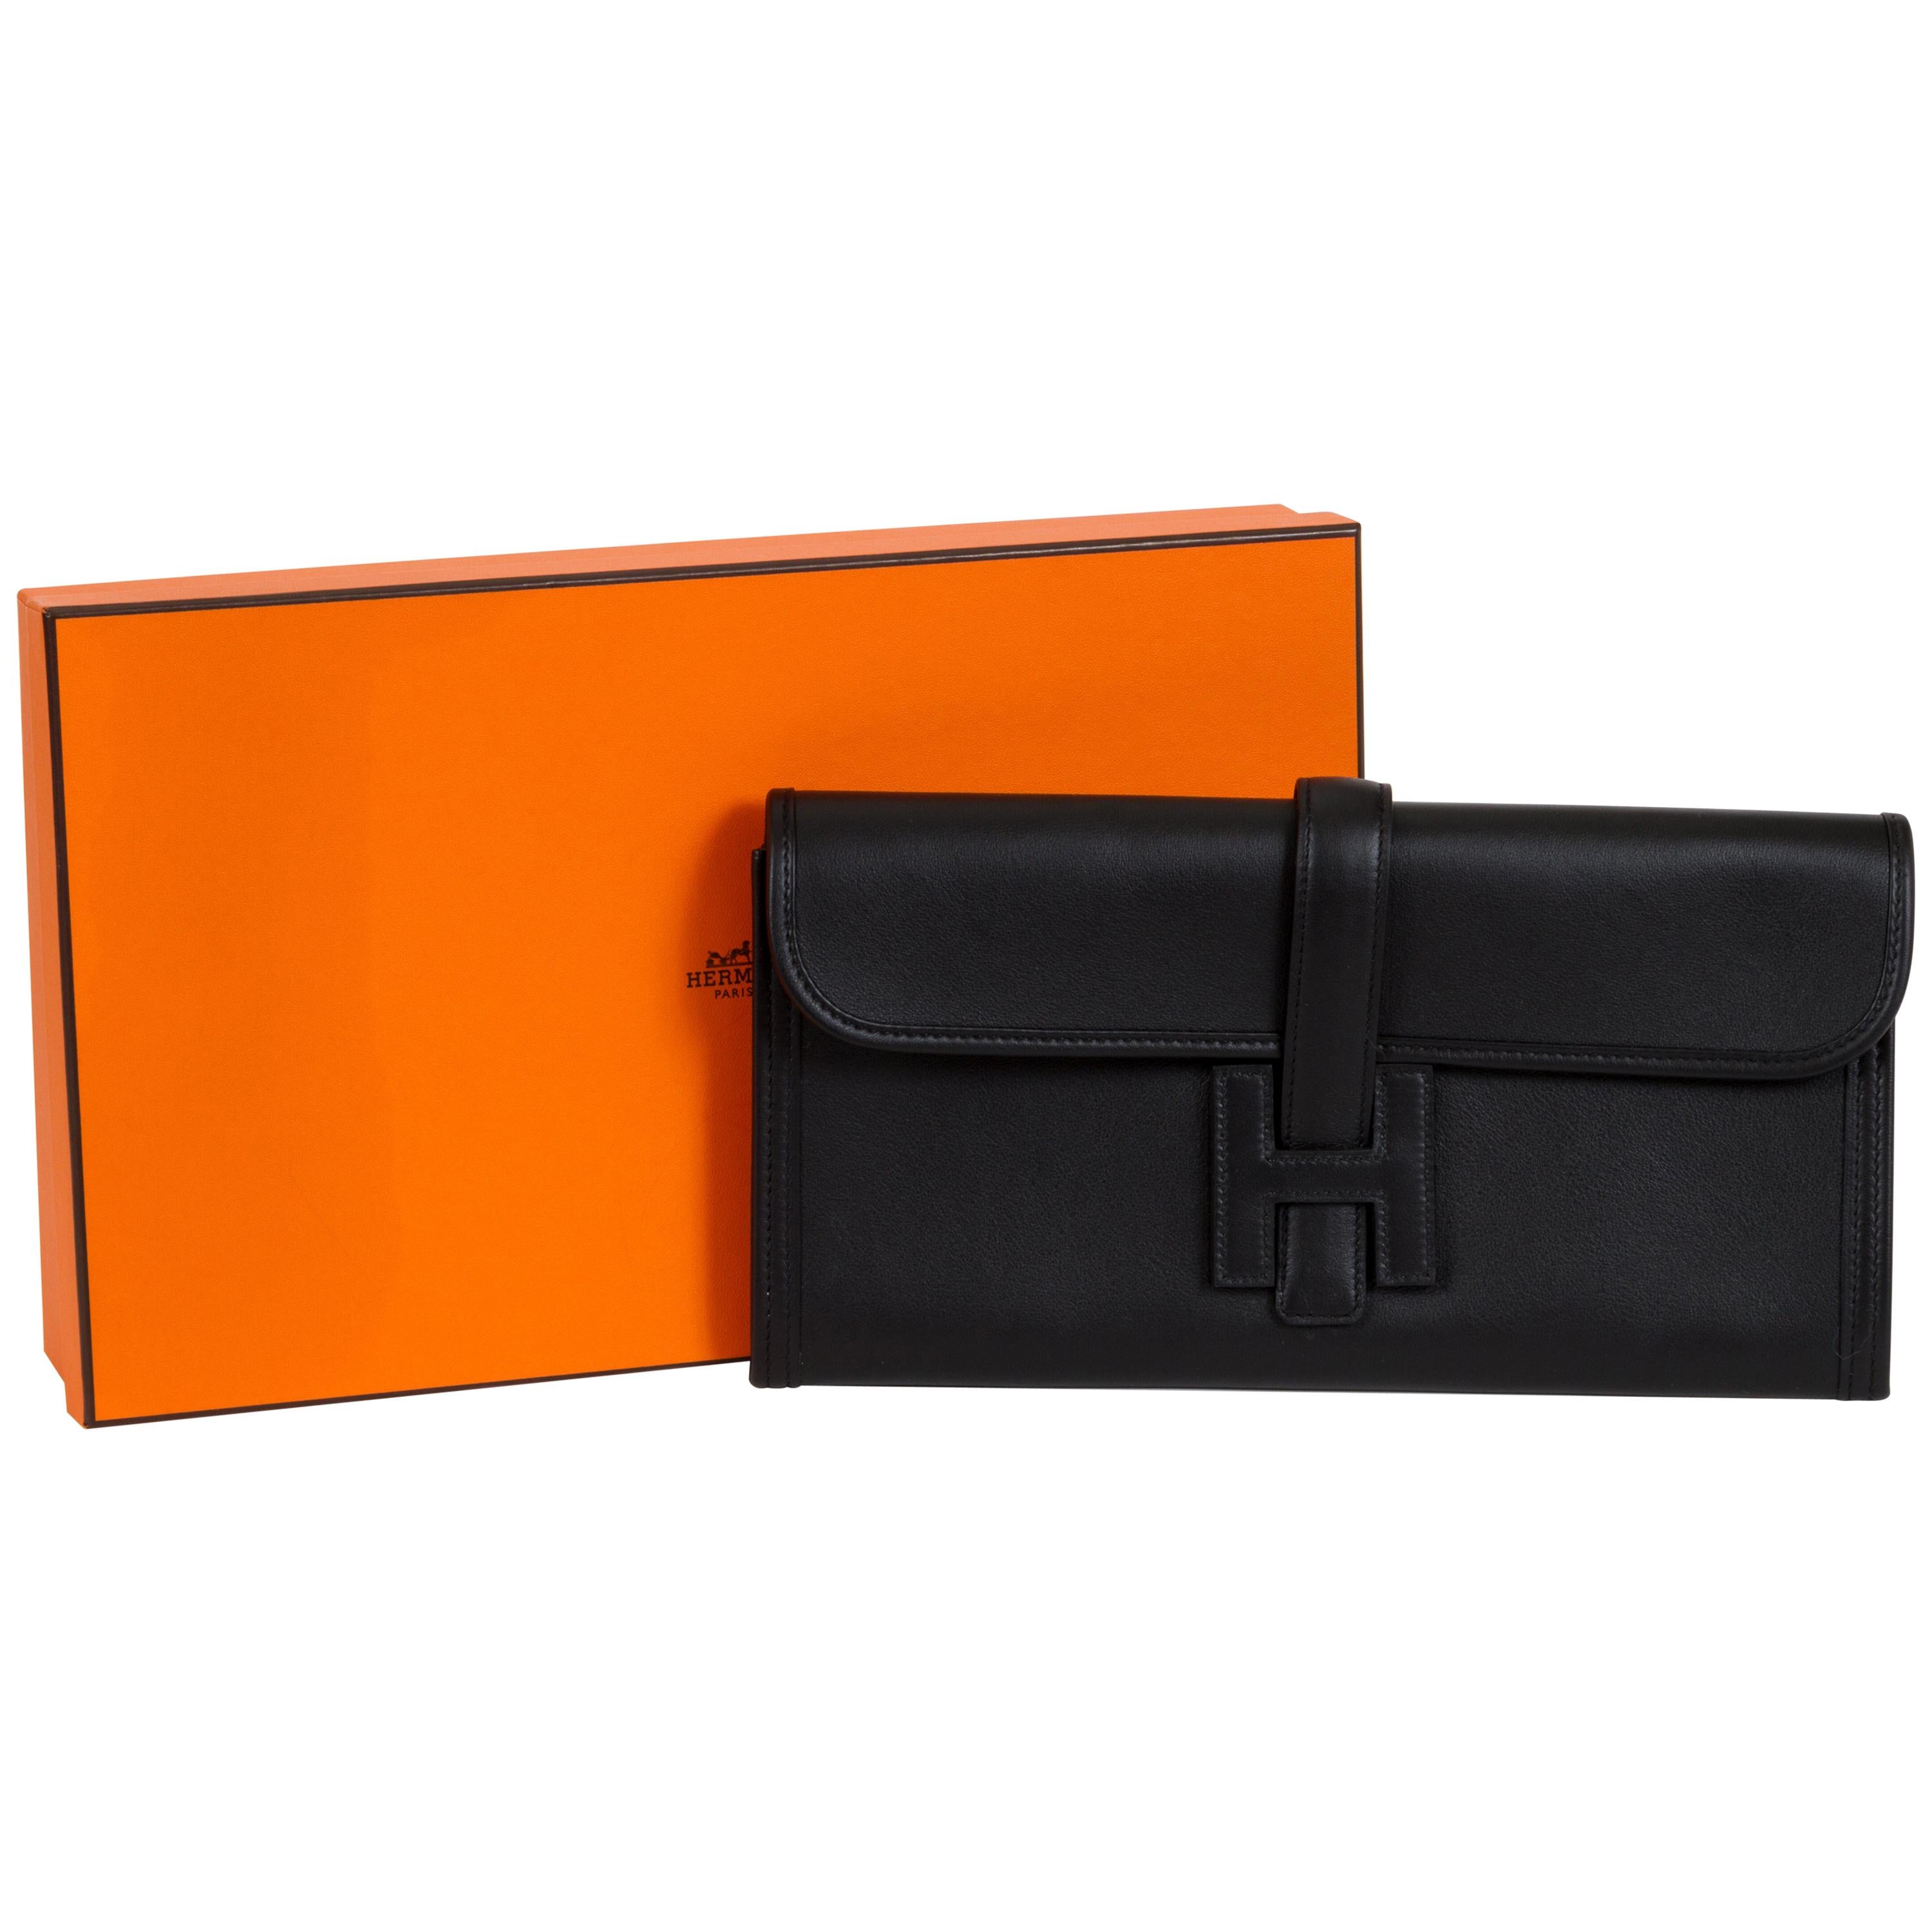 Hermes Jige Elan Clutch Epsom Leather In Orange